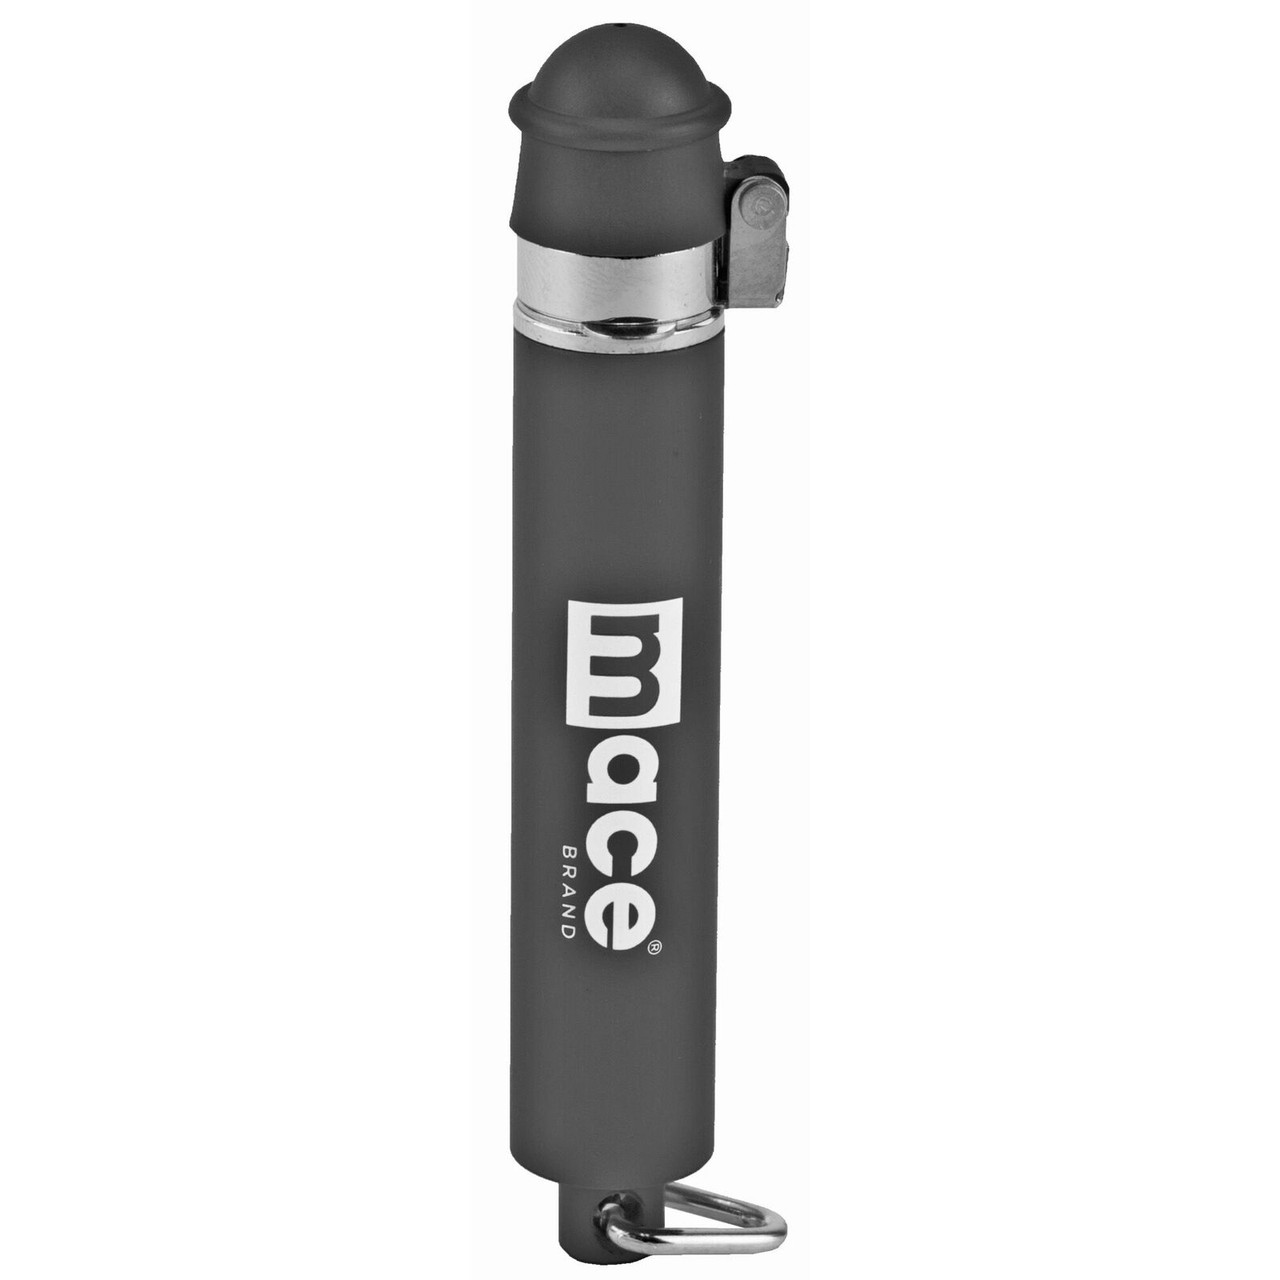 Mace Mini Model Pepper Spray Keychain 5 Foot Range 80810